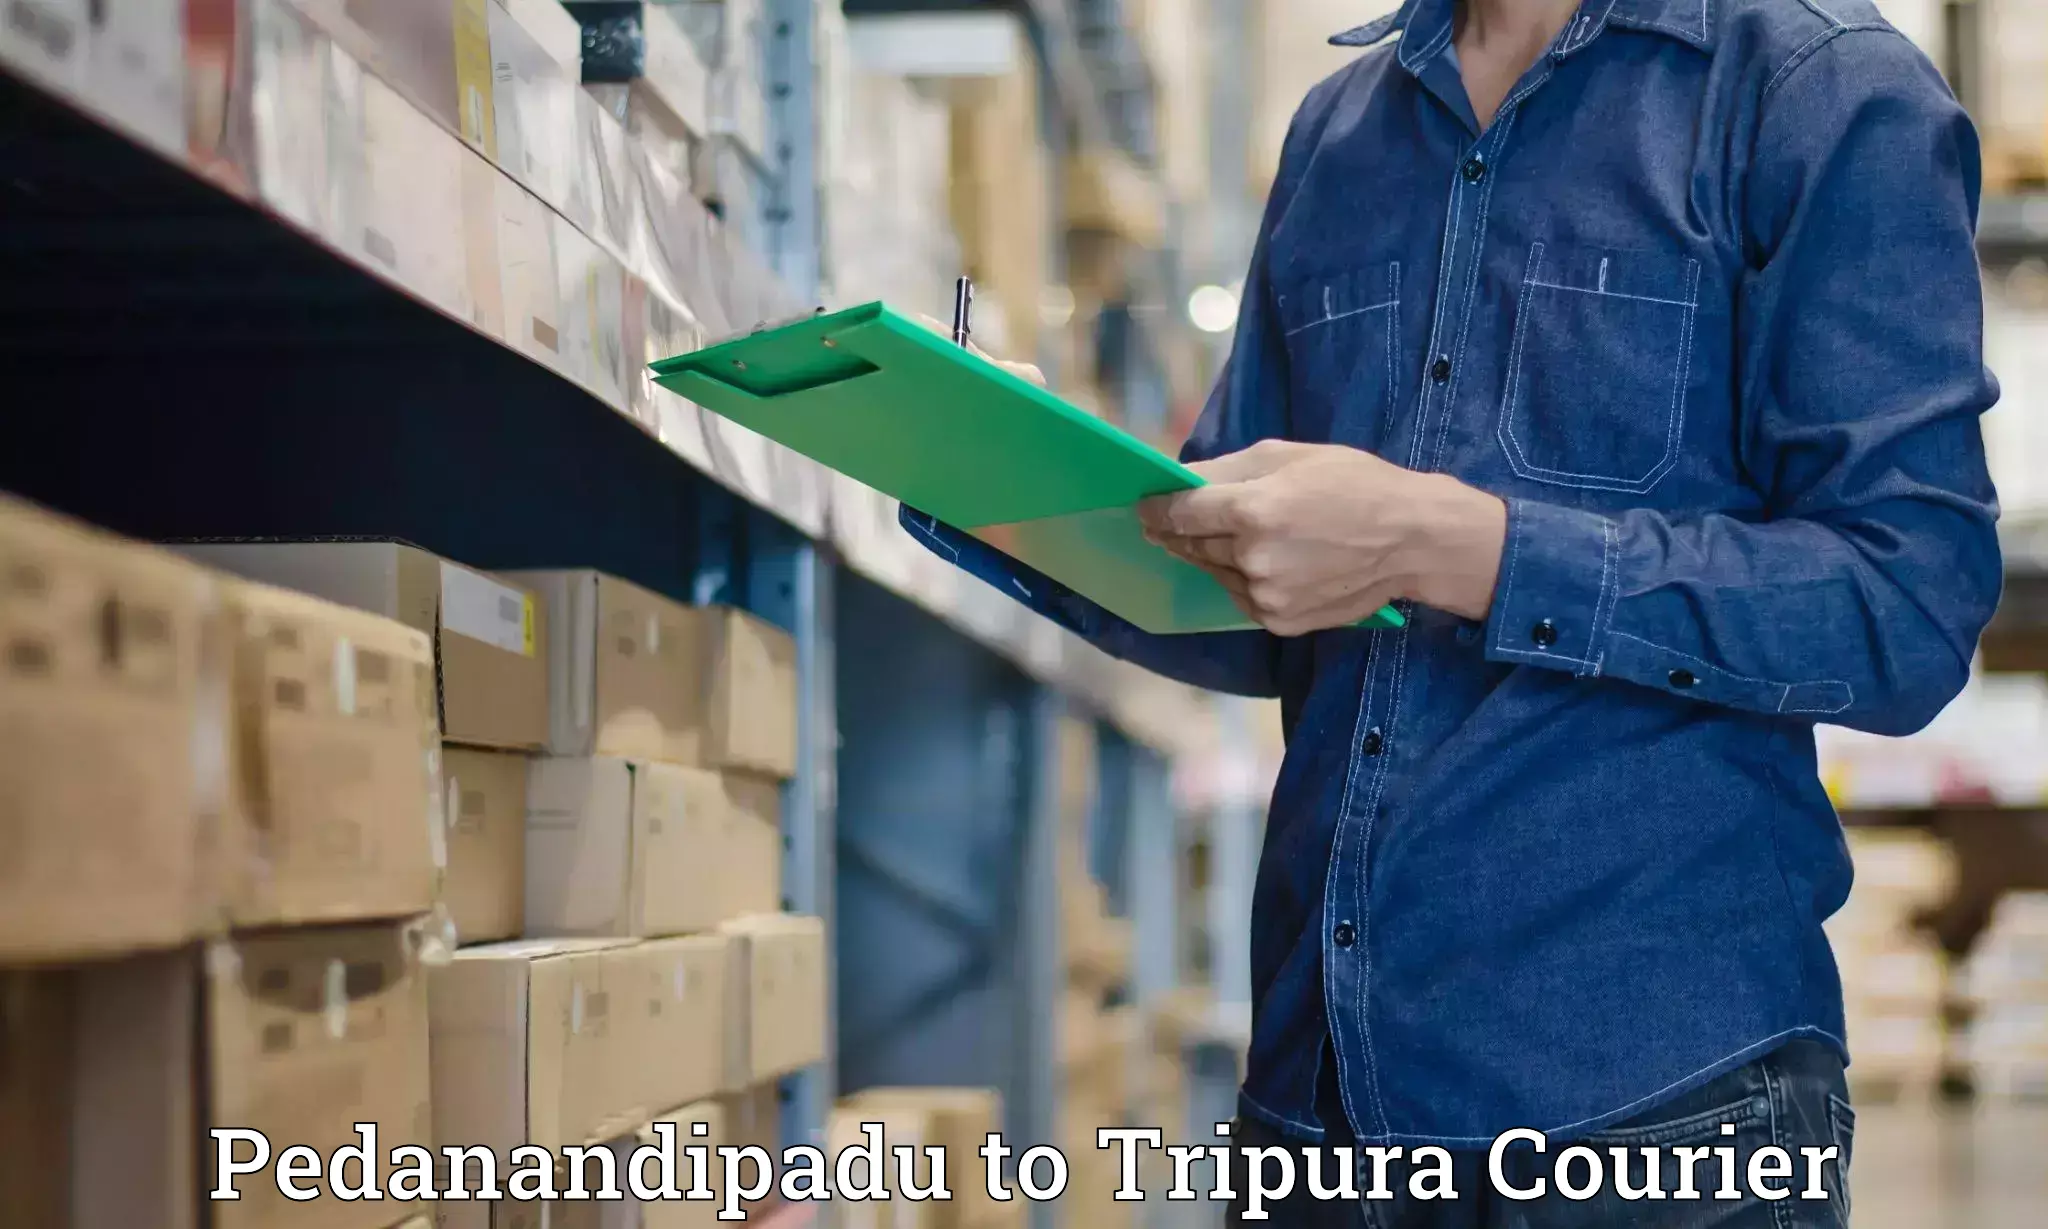 Efficient order fulfillment Pedanandipadu to Tripura